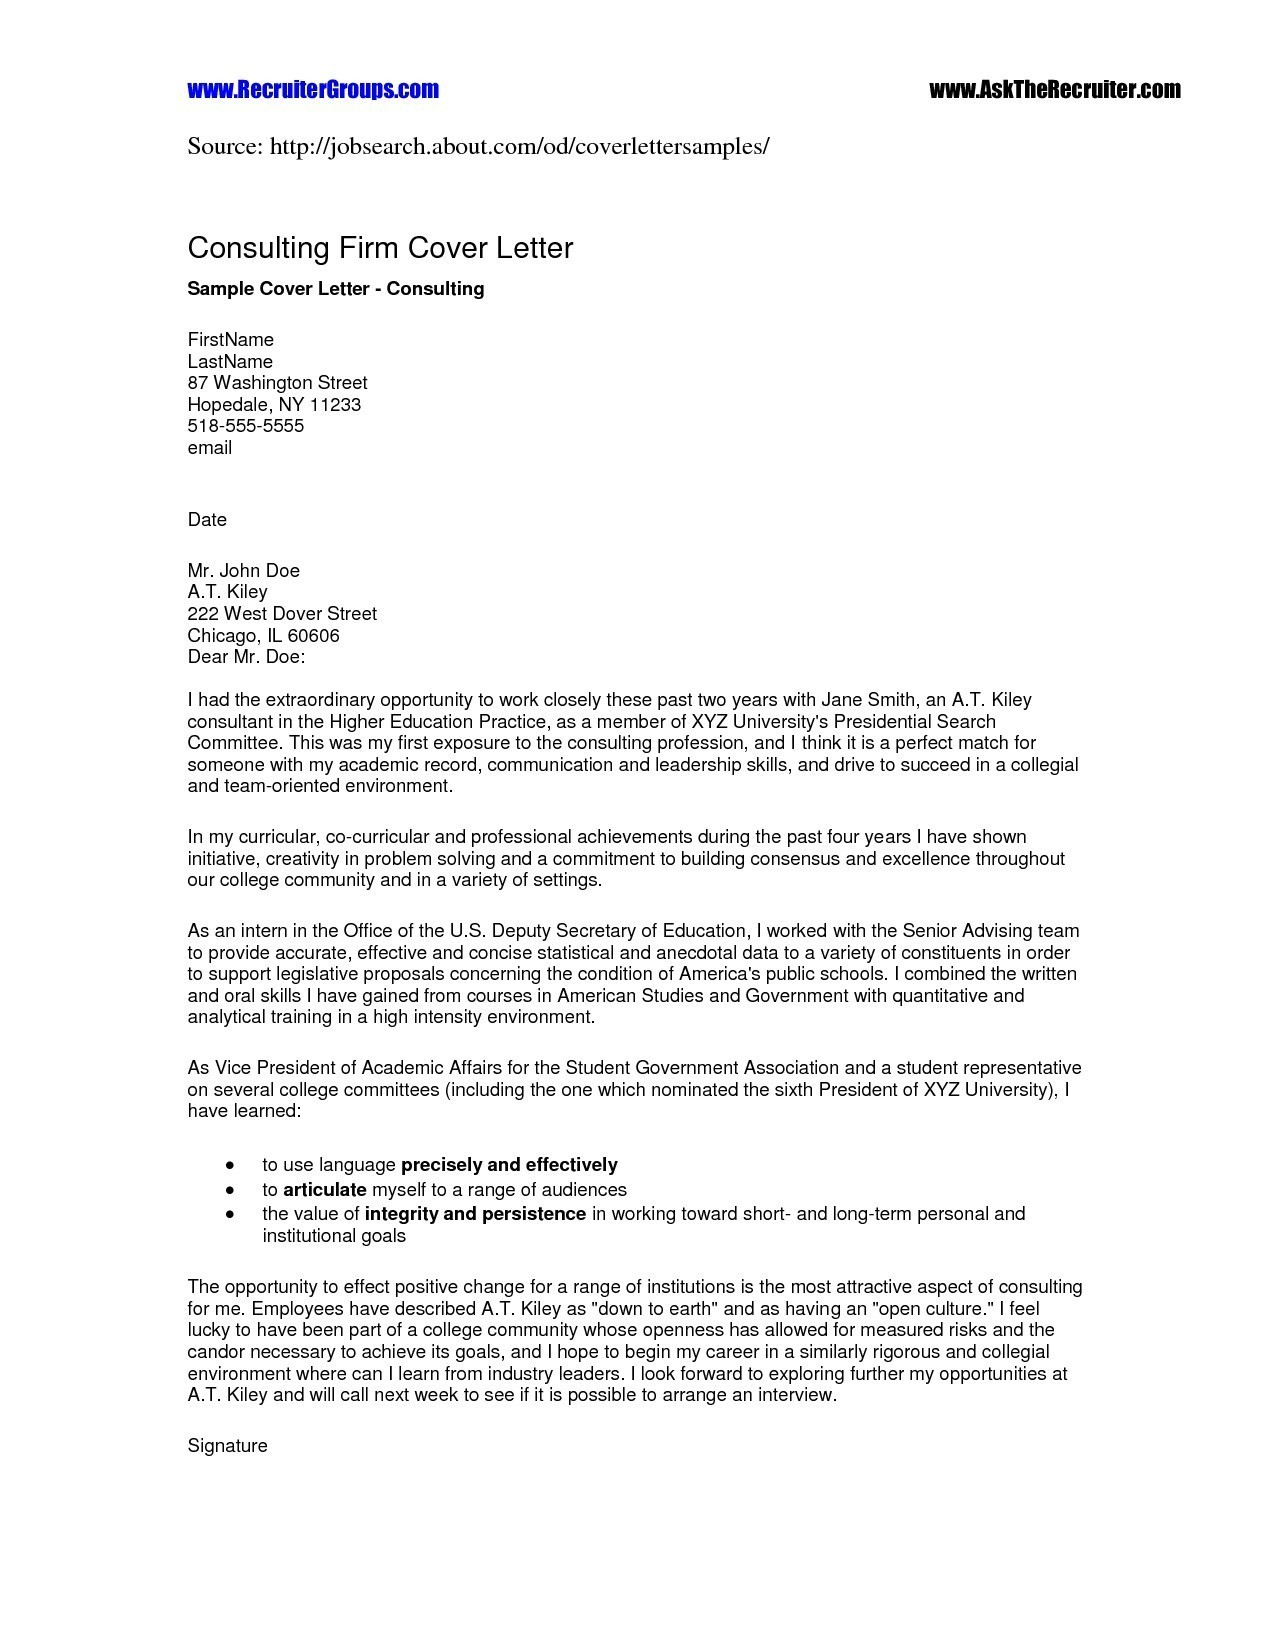 Commission Letter Template - Job Application Letter format Template Copy Cover Letter Template Hr